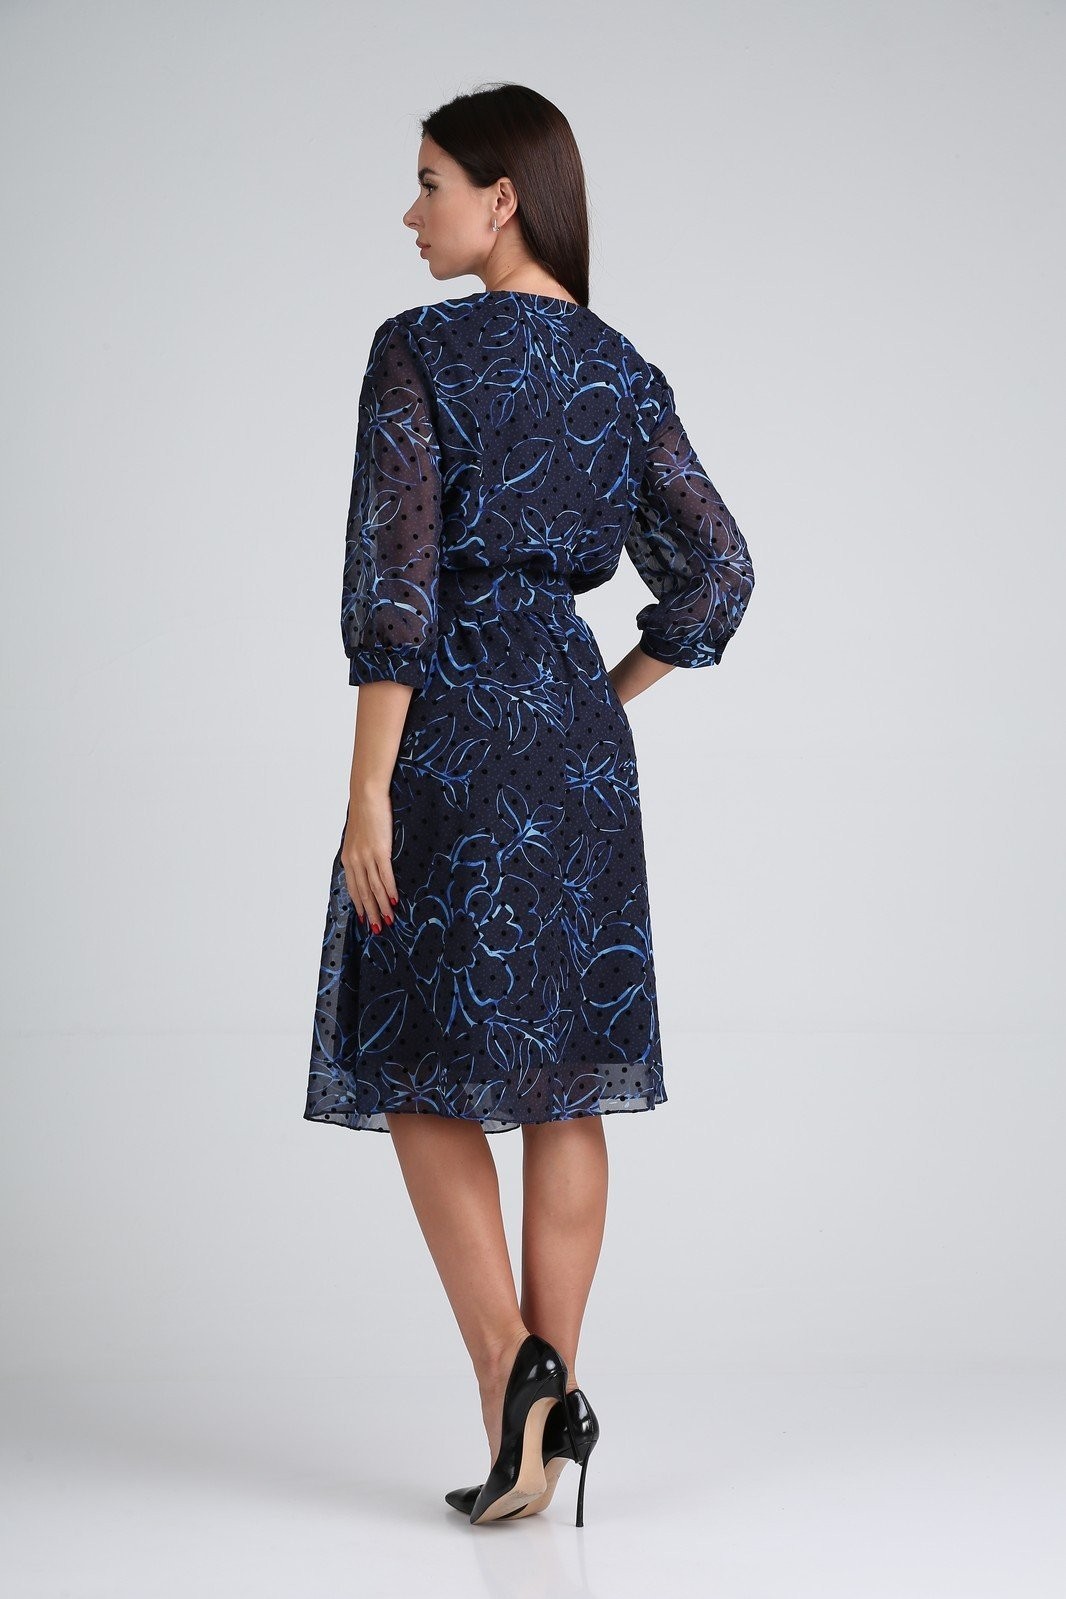 Платье Мода-Версаль 2318 синий